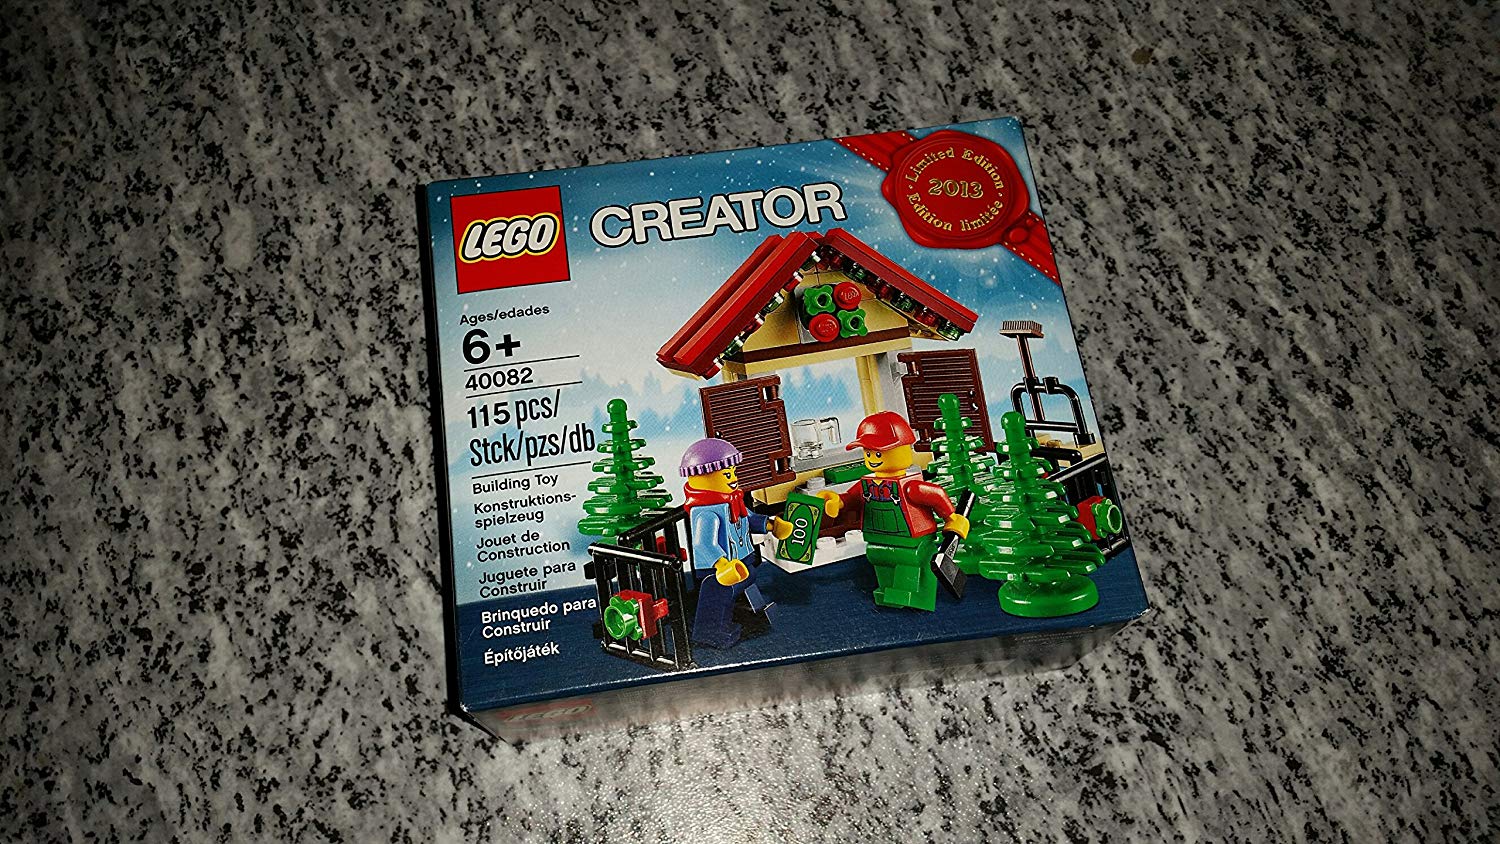 Lego Creator 40082 Christmas Scene Set 2013 Limited Edition (115 pieces)